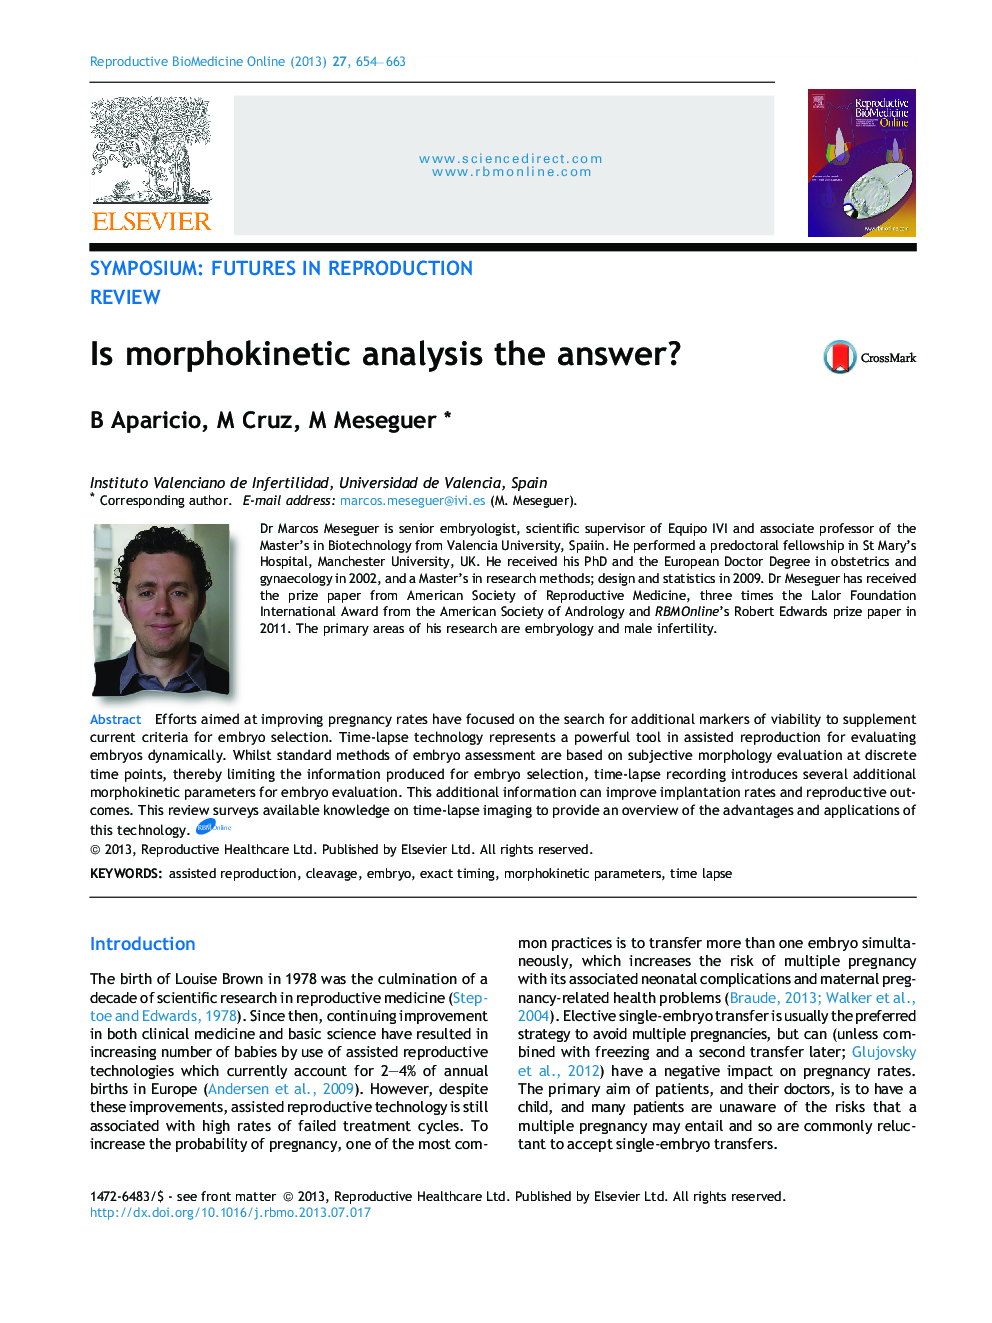 Is morphokinetic analysis the answer? 